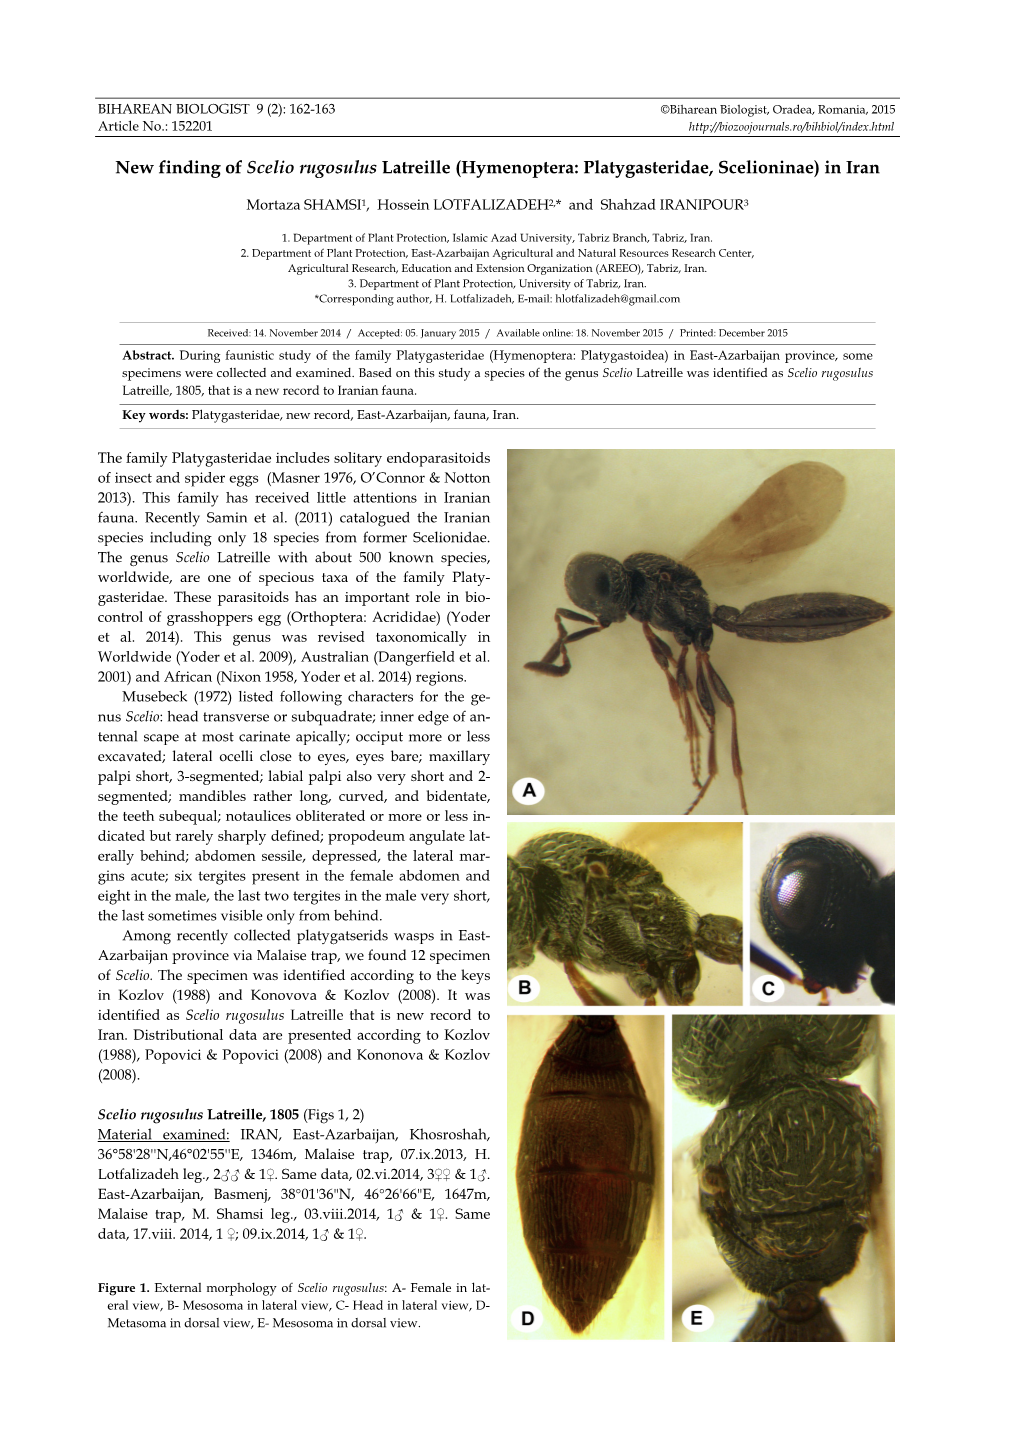 New Finding of Scelio Rugosulus Latreille (Hymenoptera: Platygasteridae, Scelioninae) in Iran